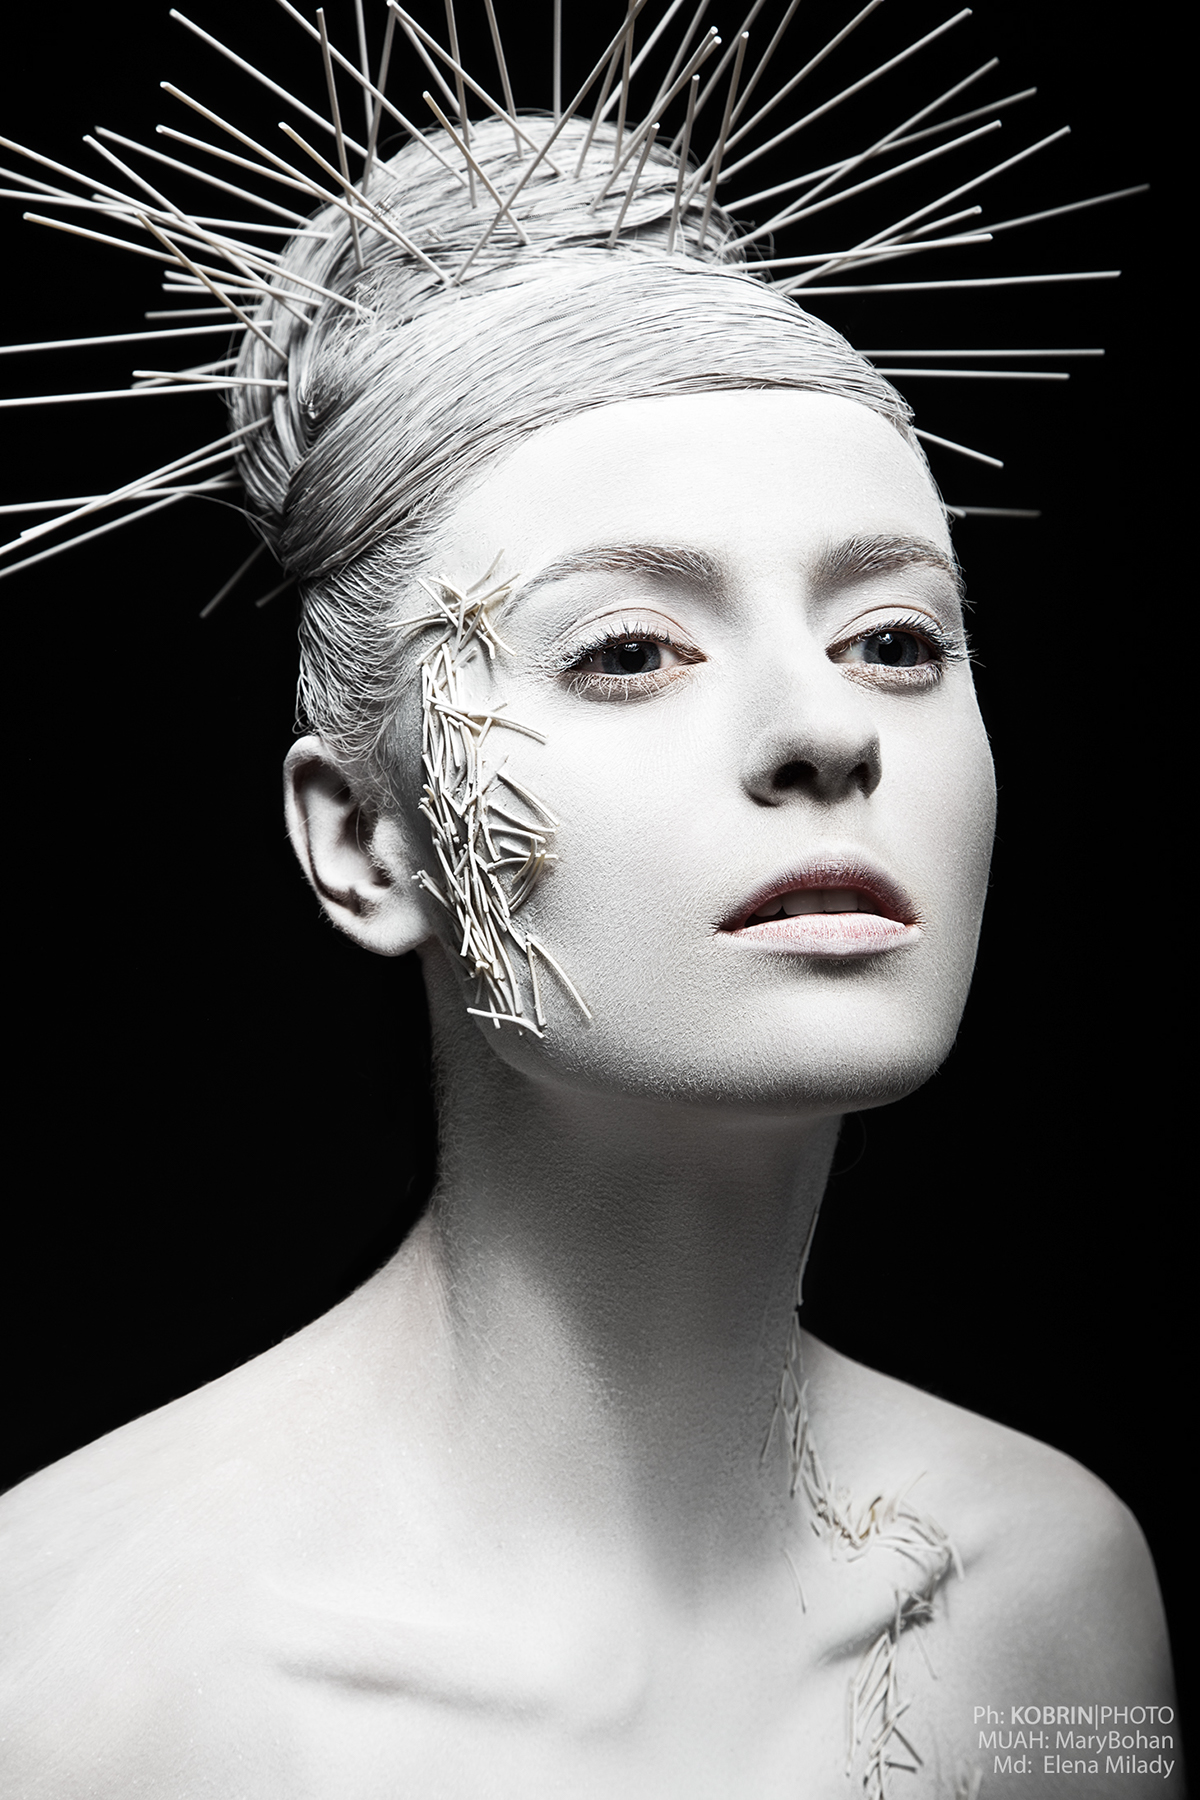 art Unusual model studio glamor creative girl face body woman makeup beauty albino bodyart haircut